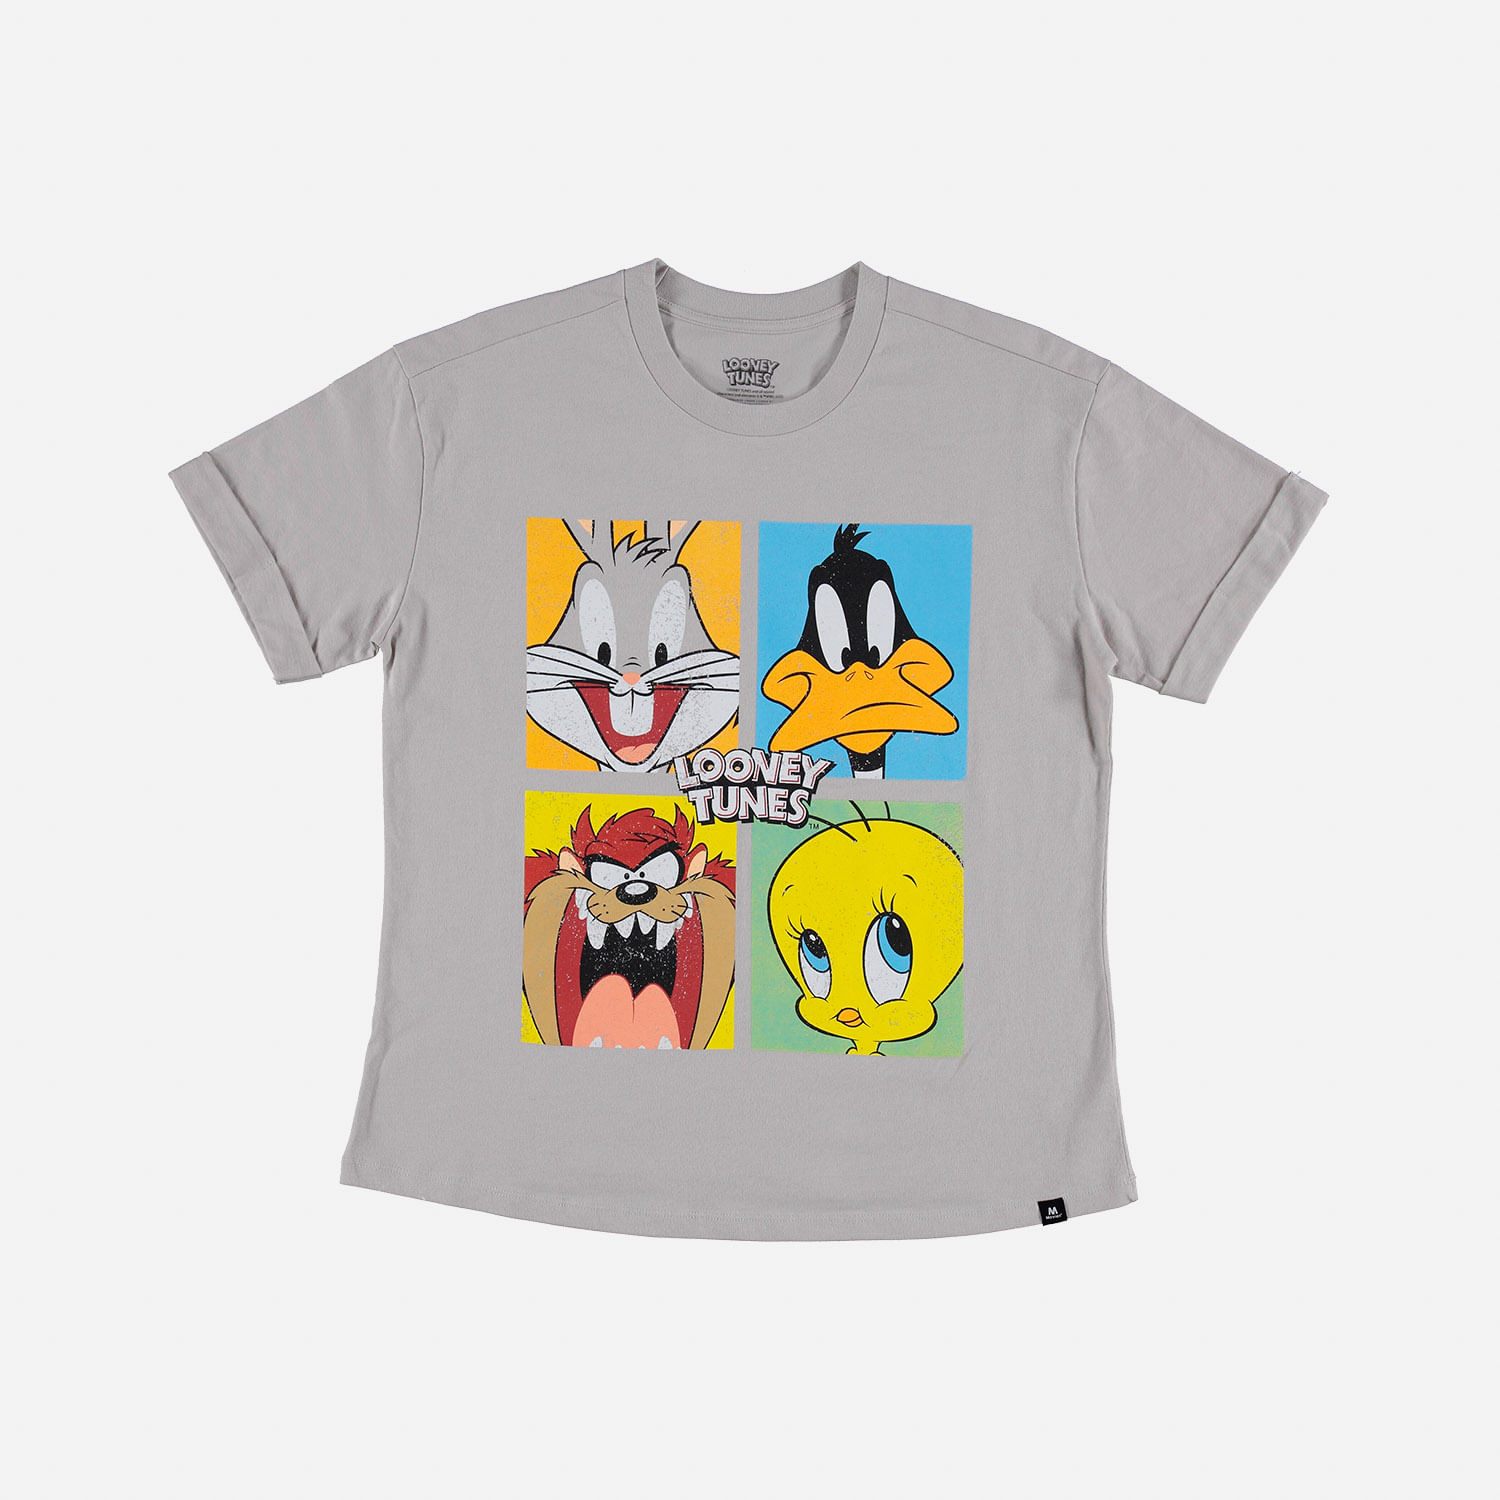 Camiseta de Looney Tunes manga corta niebla para mujer